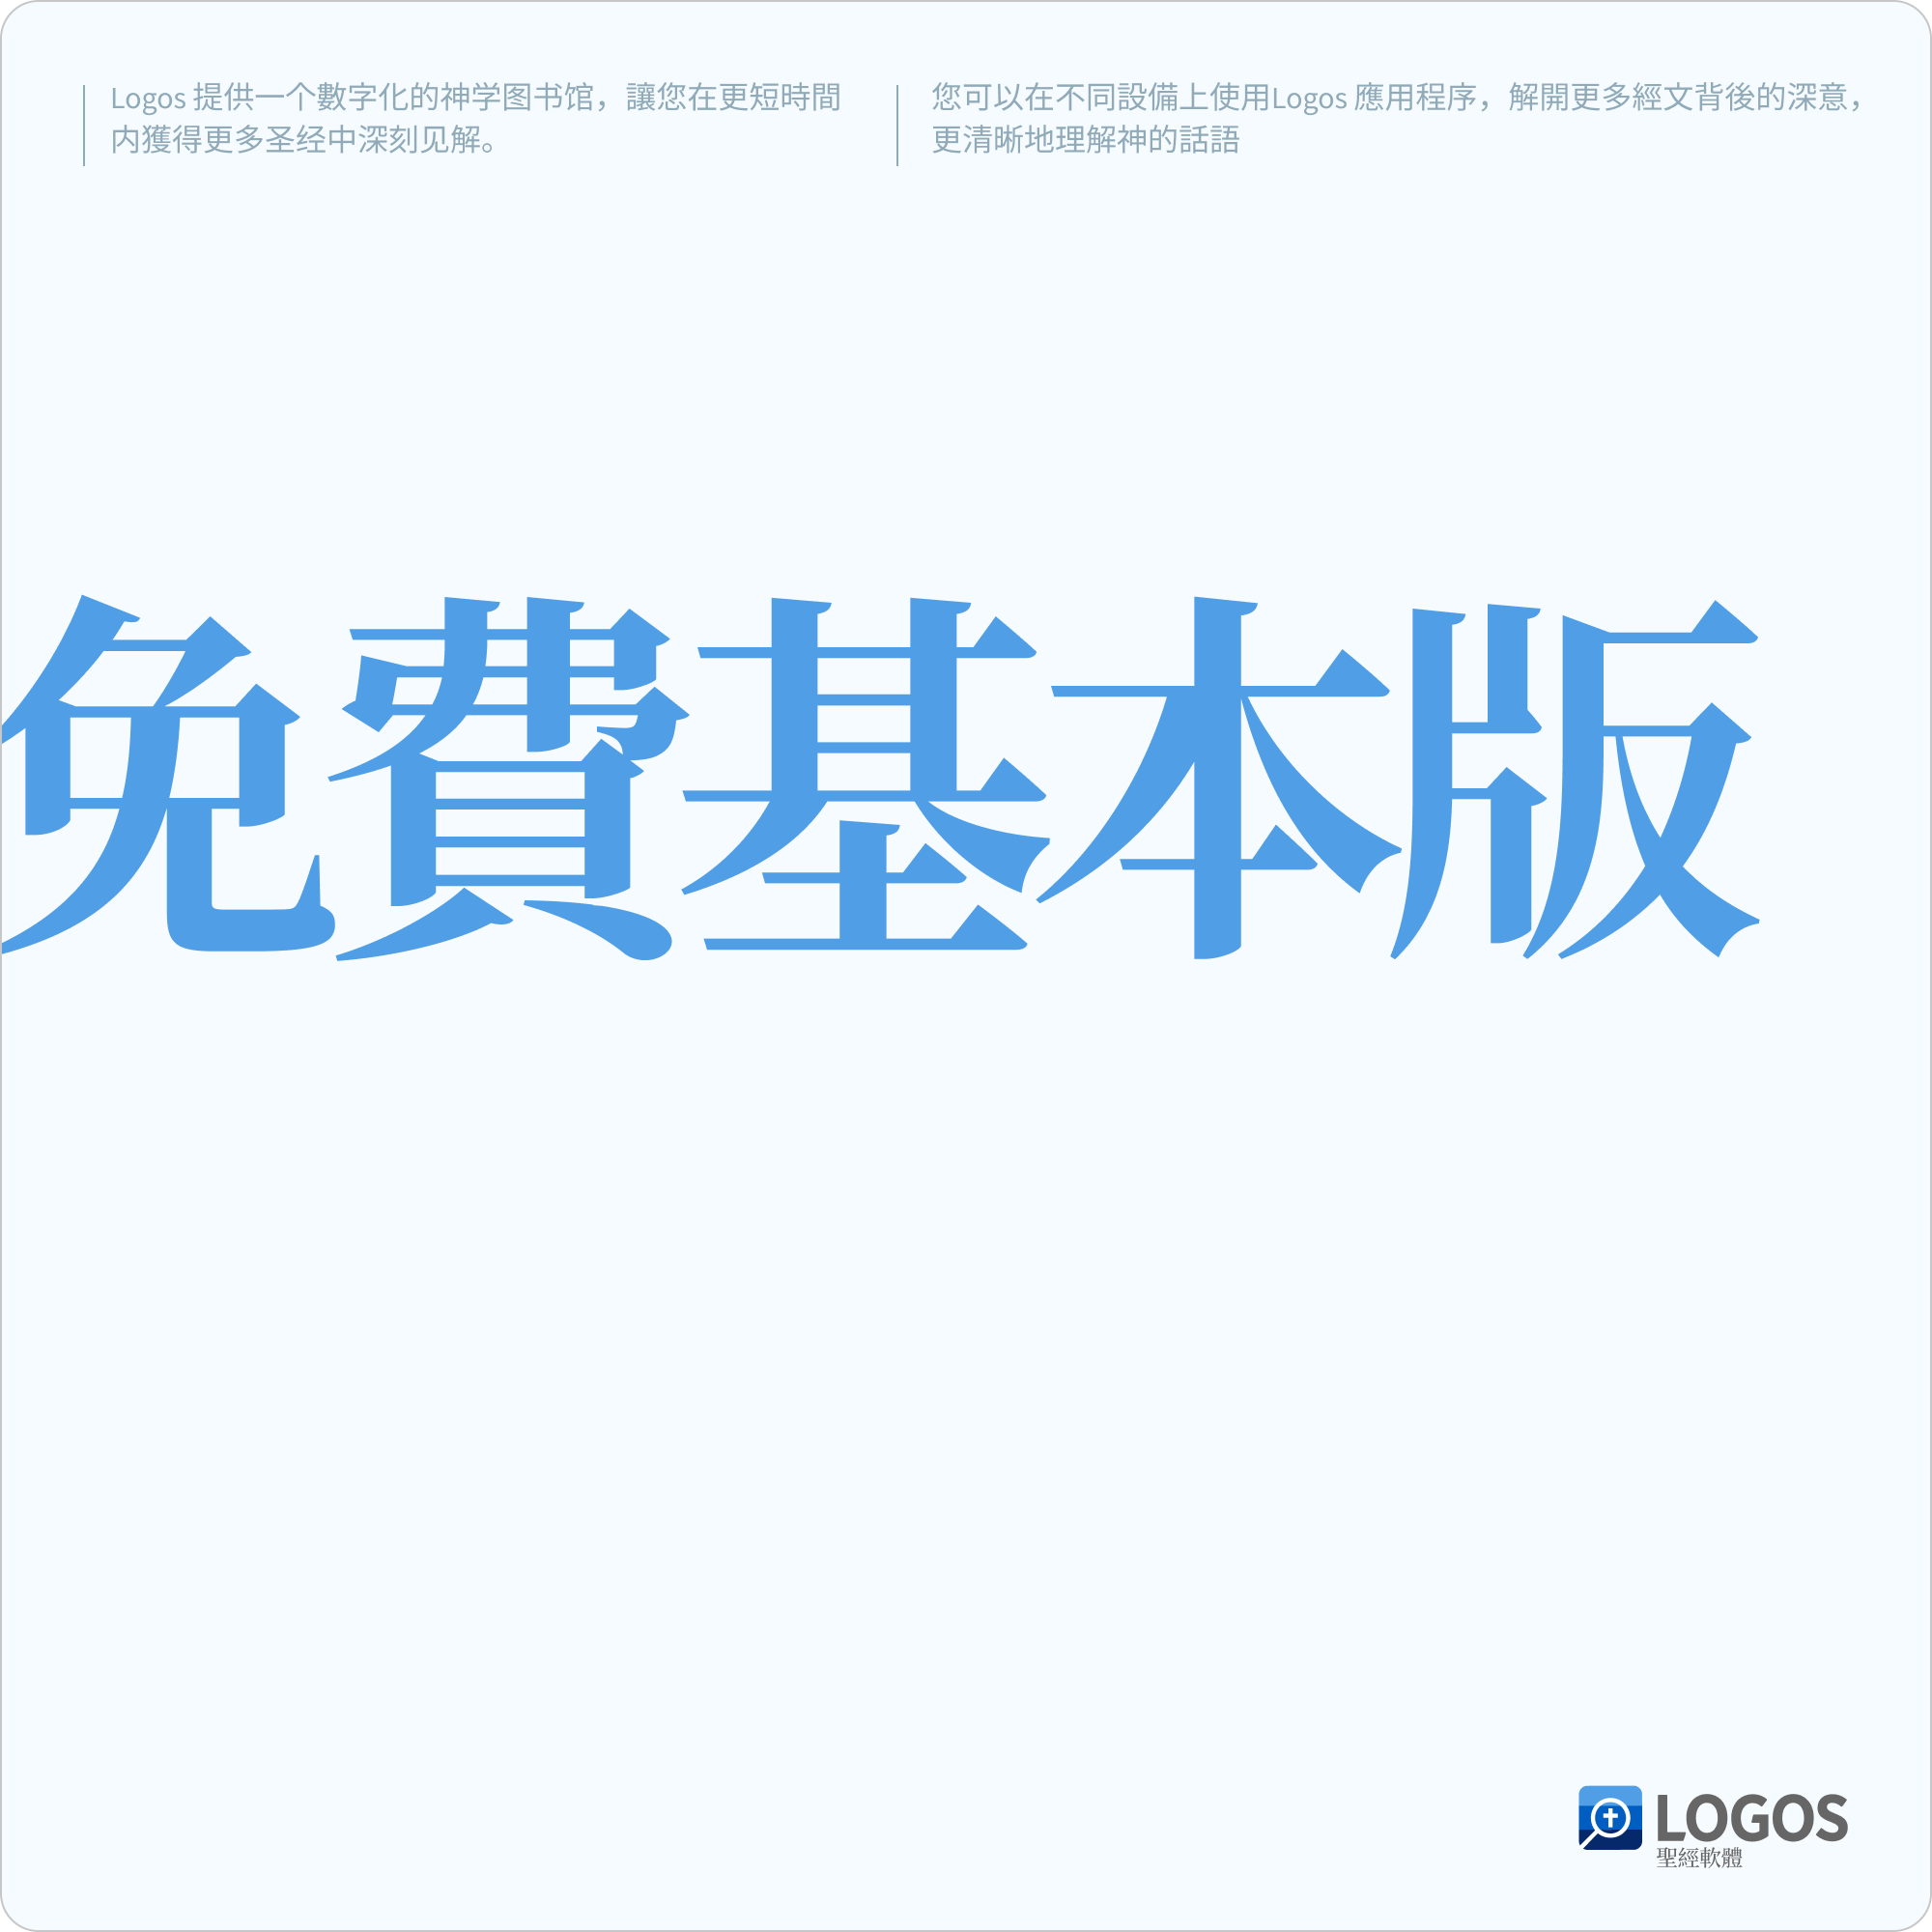 Logos 中文免费基本版